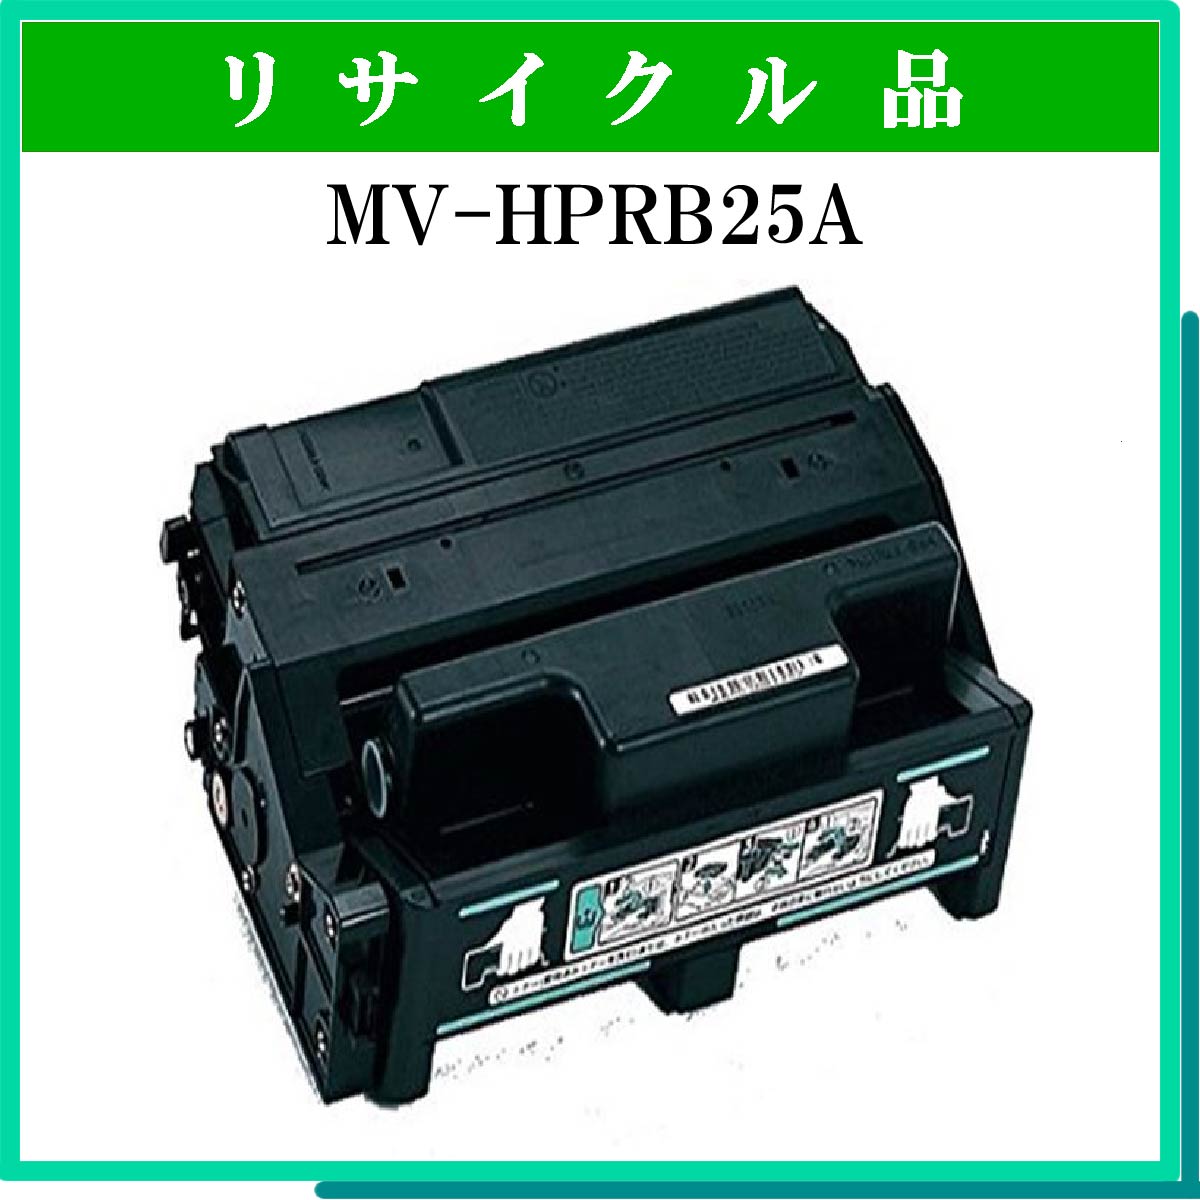 MV-HPRB25A